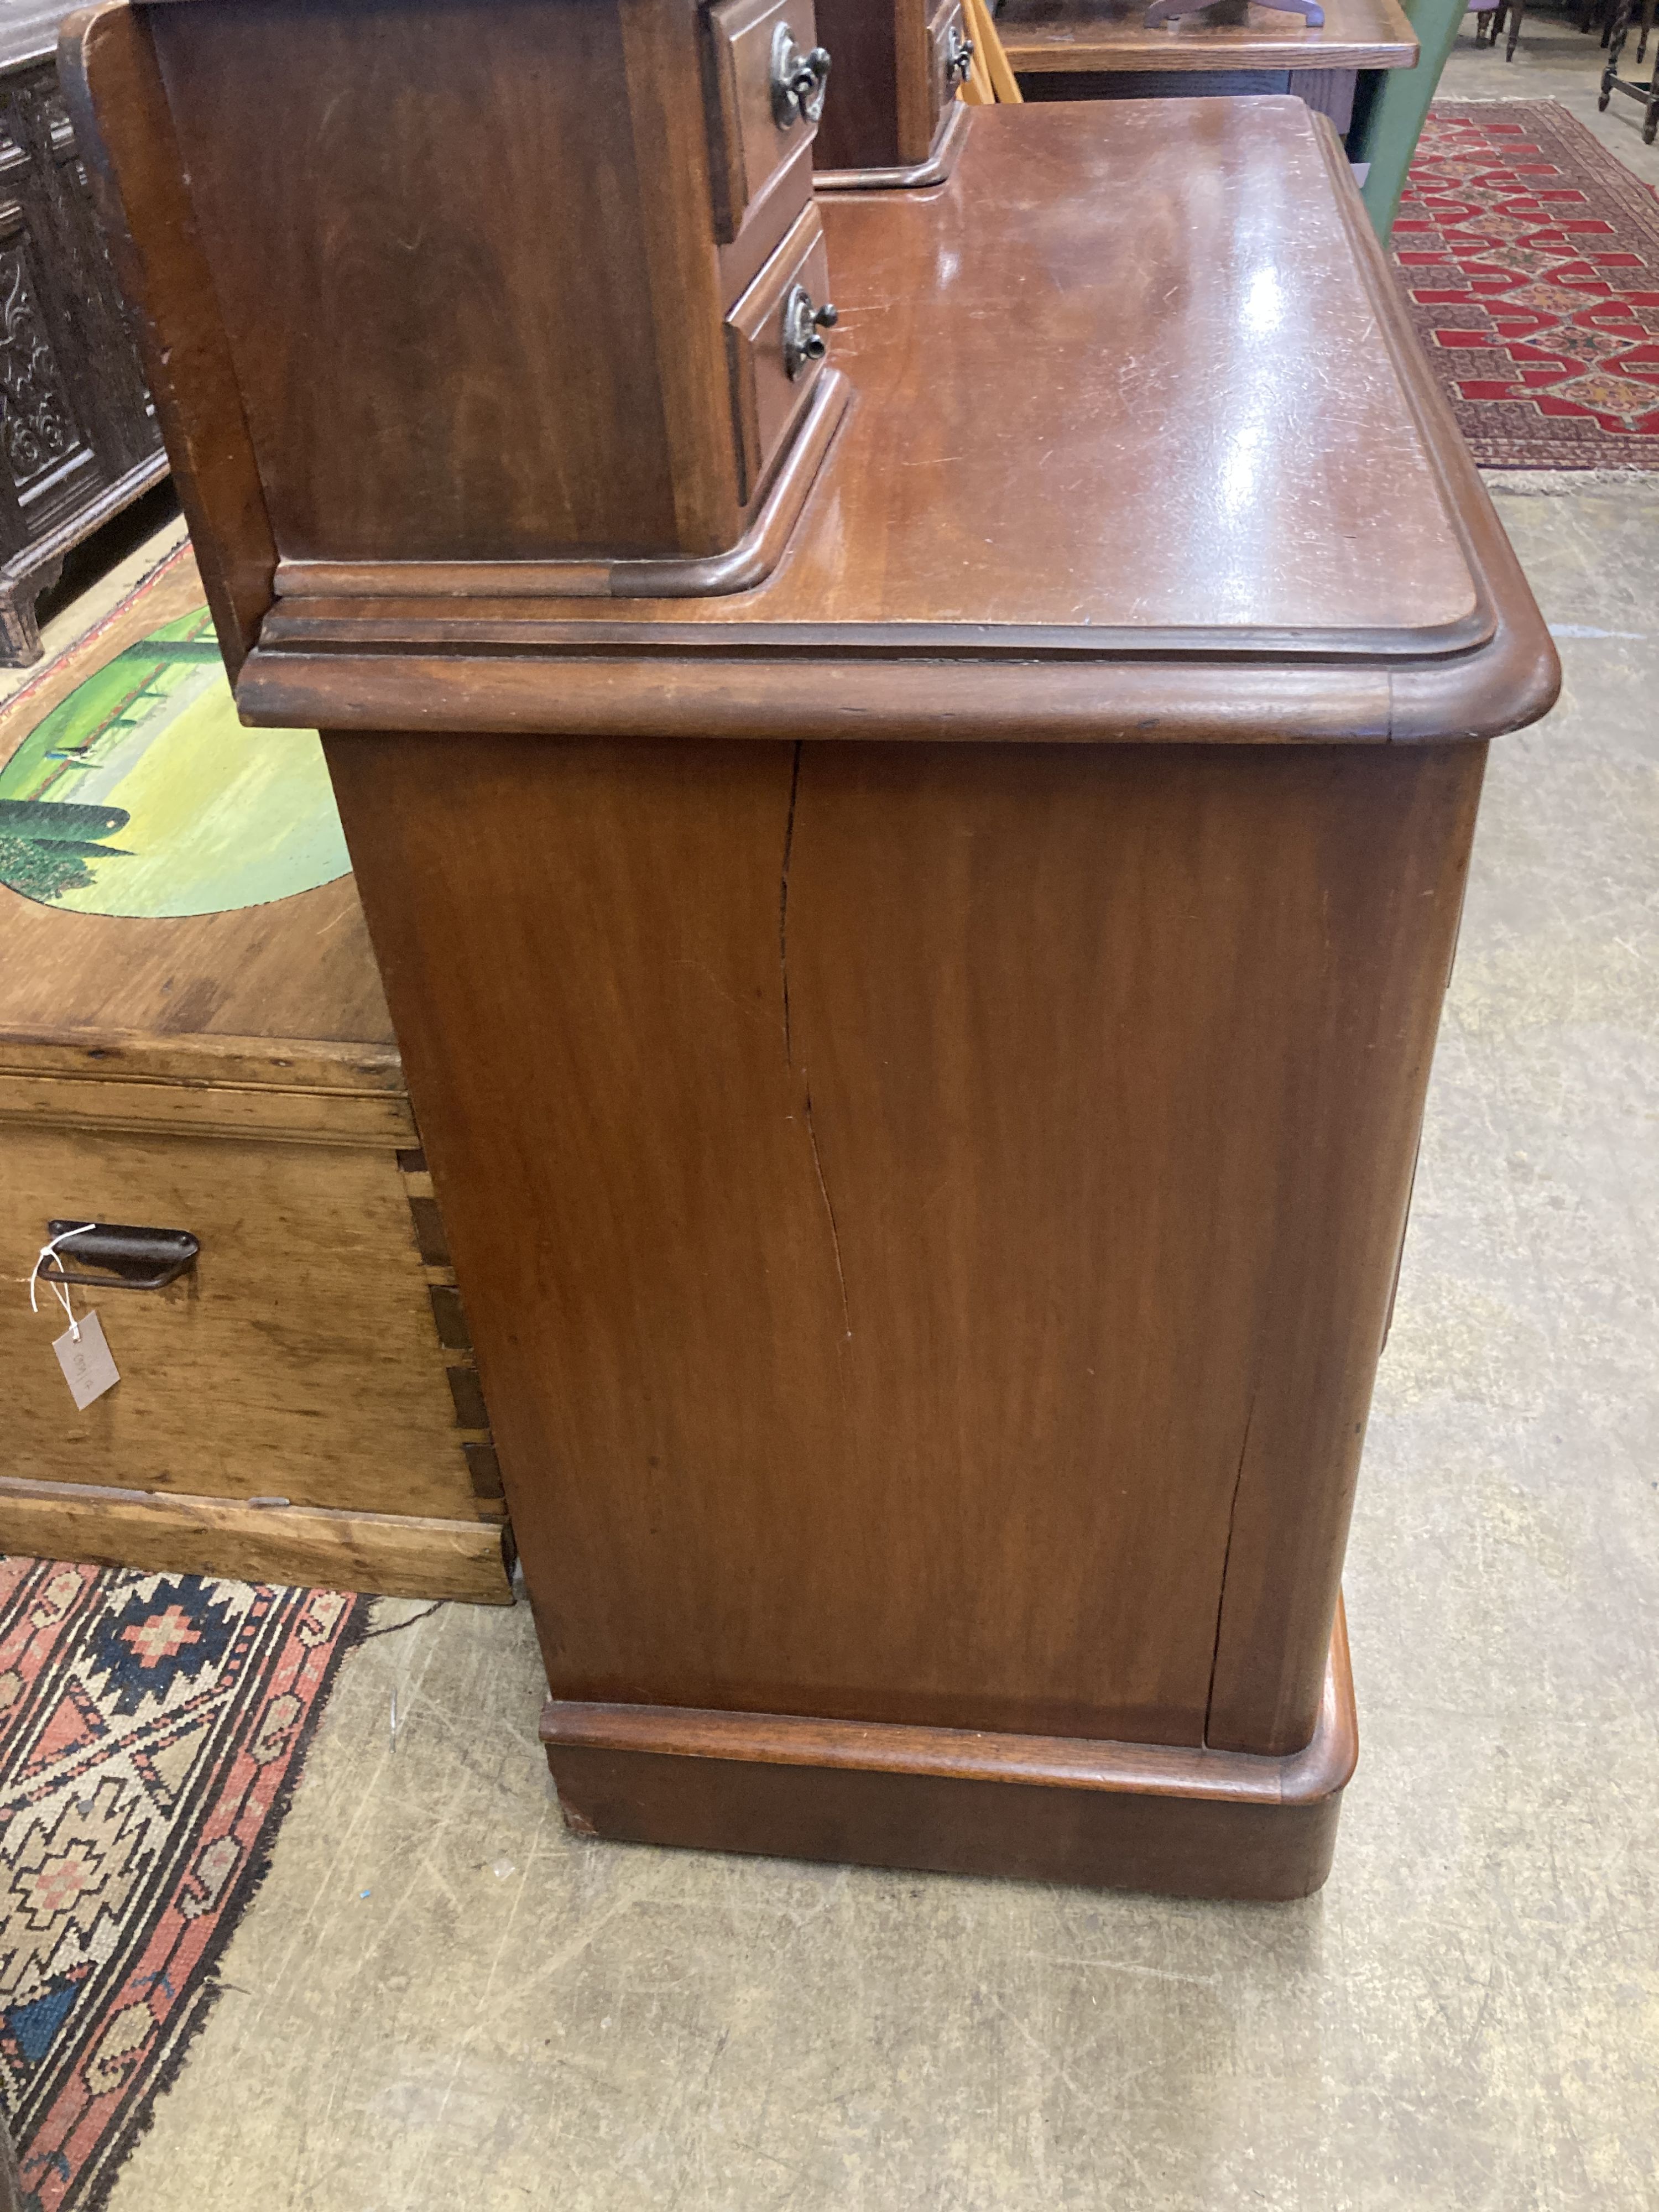 A Victorian mahogany dressing chest, width 118cm, depth 52cm, height 192cm